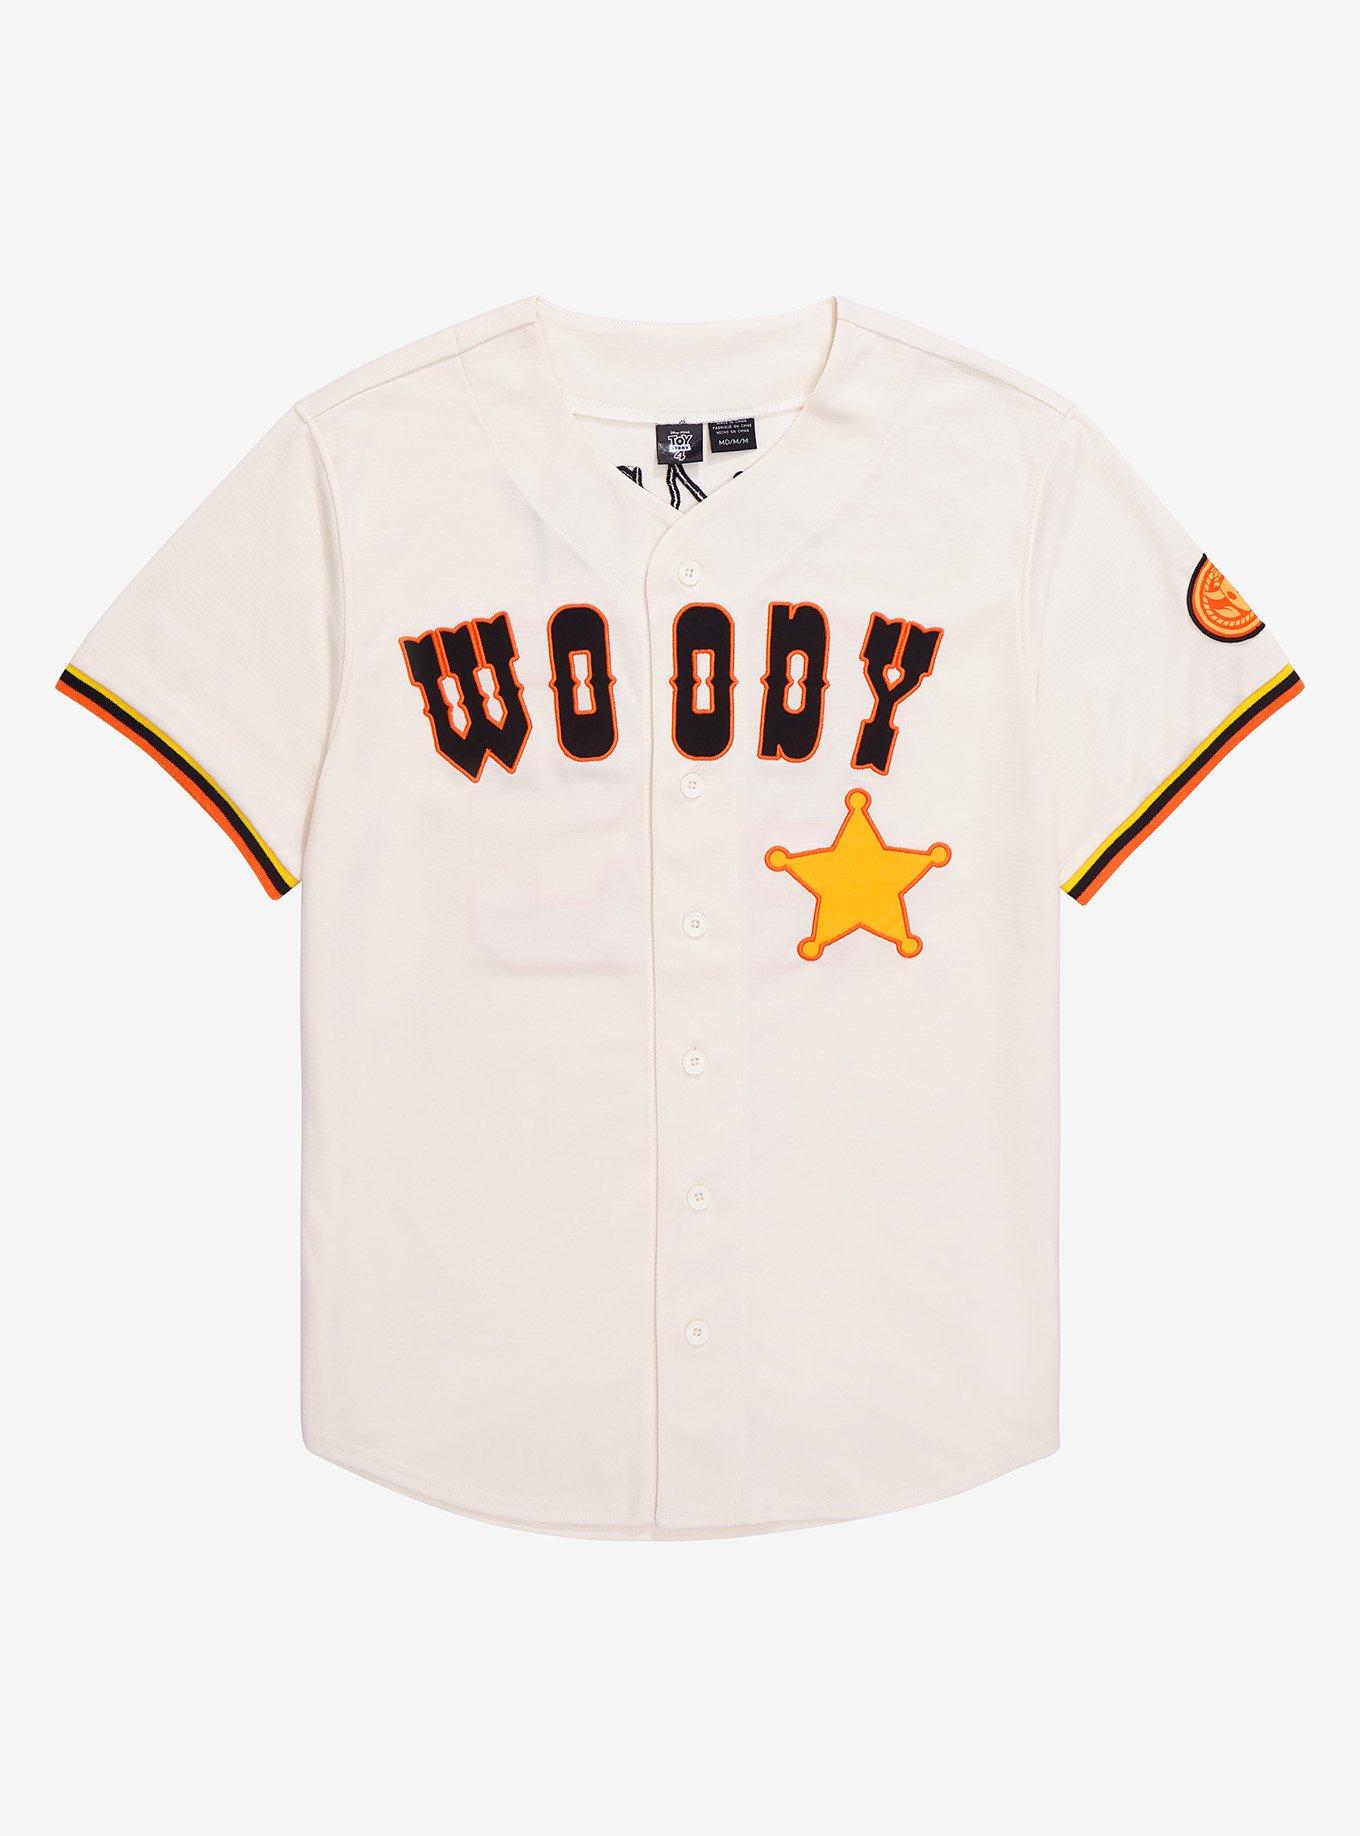 Woody Toy Story Disney Baseball Jersey - Anime Ape